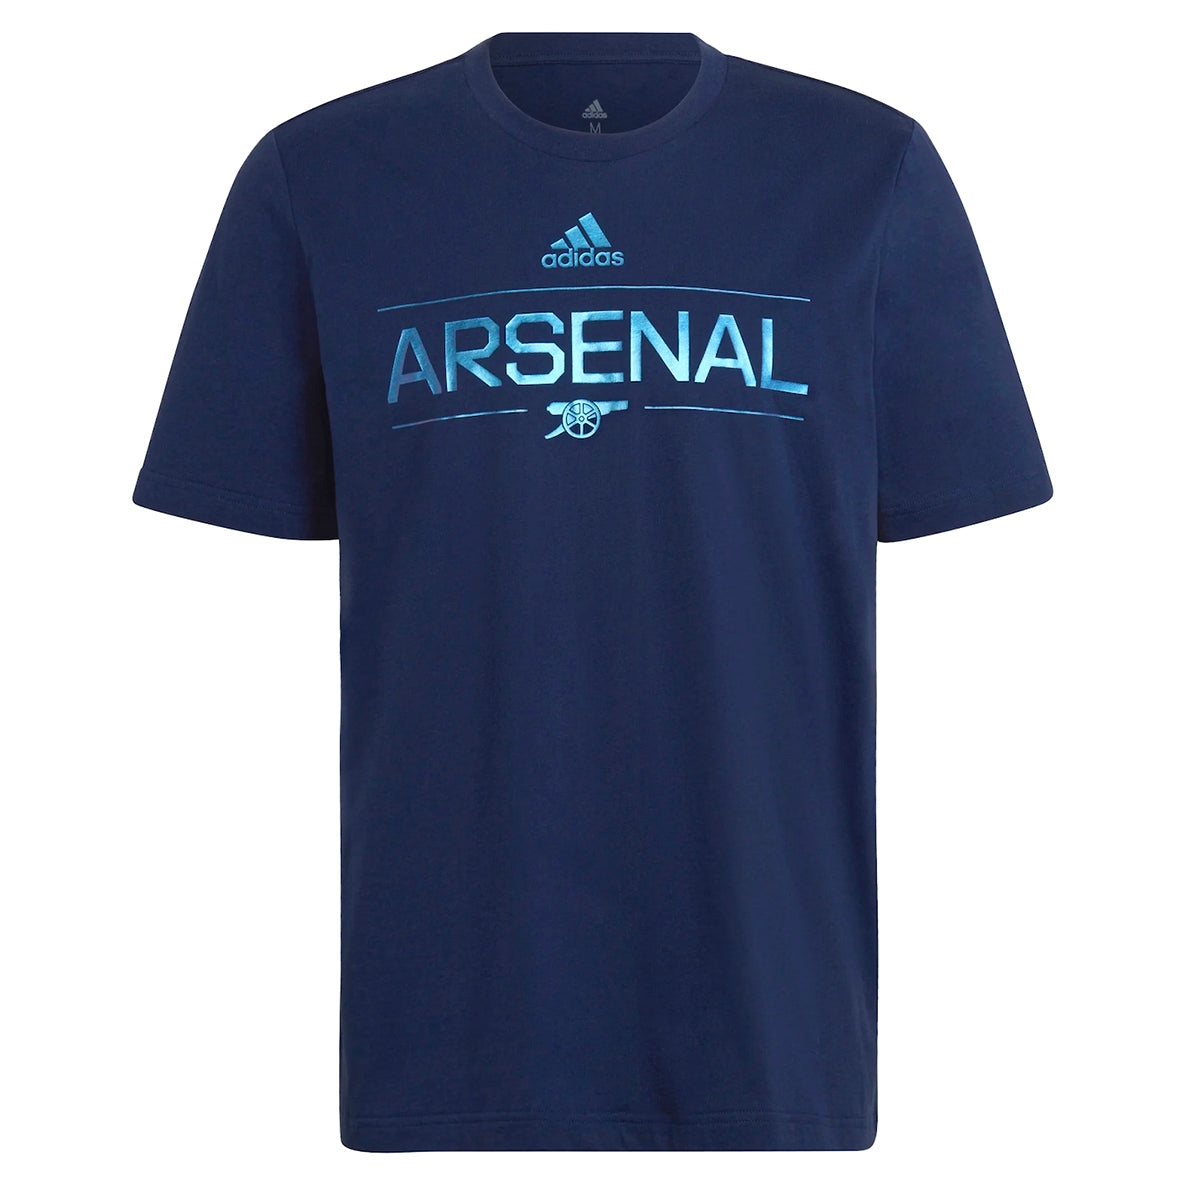 adidas Men's Arsenal Graphic Tee | HG1239 Tshirt Adidas Adult Small Team Navy Blue 2 